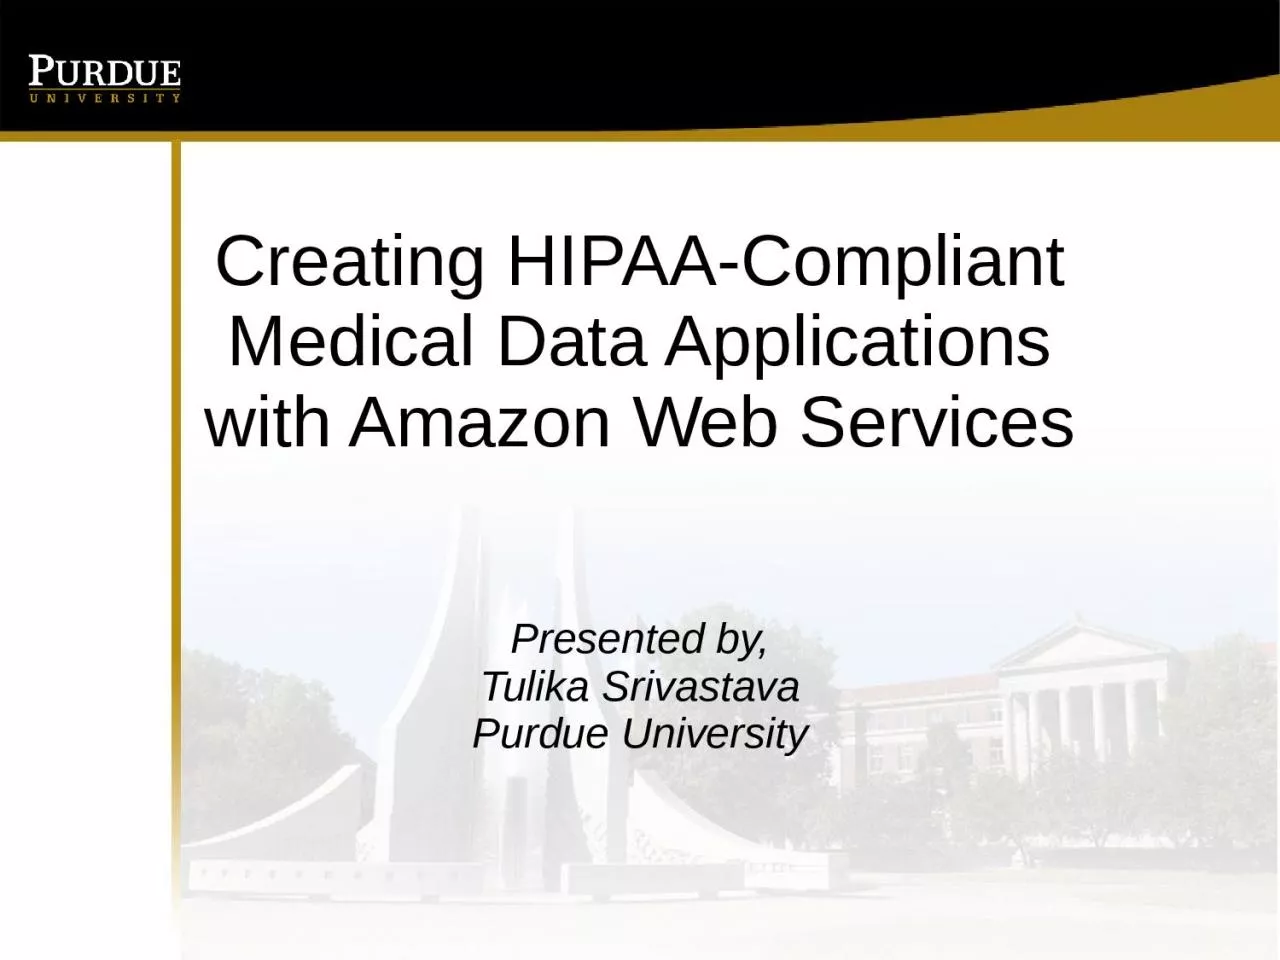 Creating HIPAA-Compliant Medical Data Applications